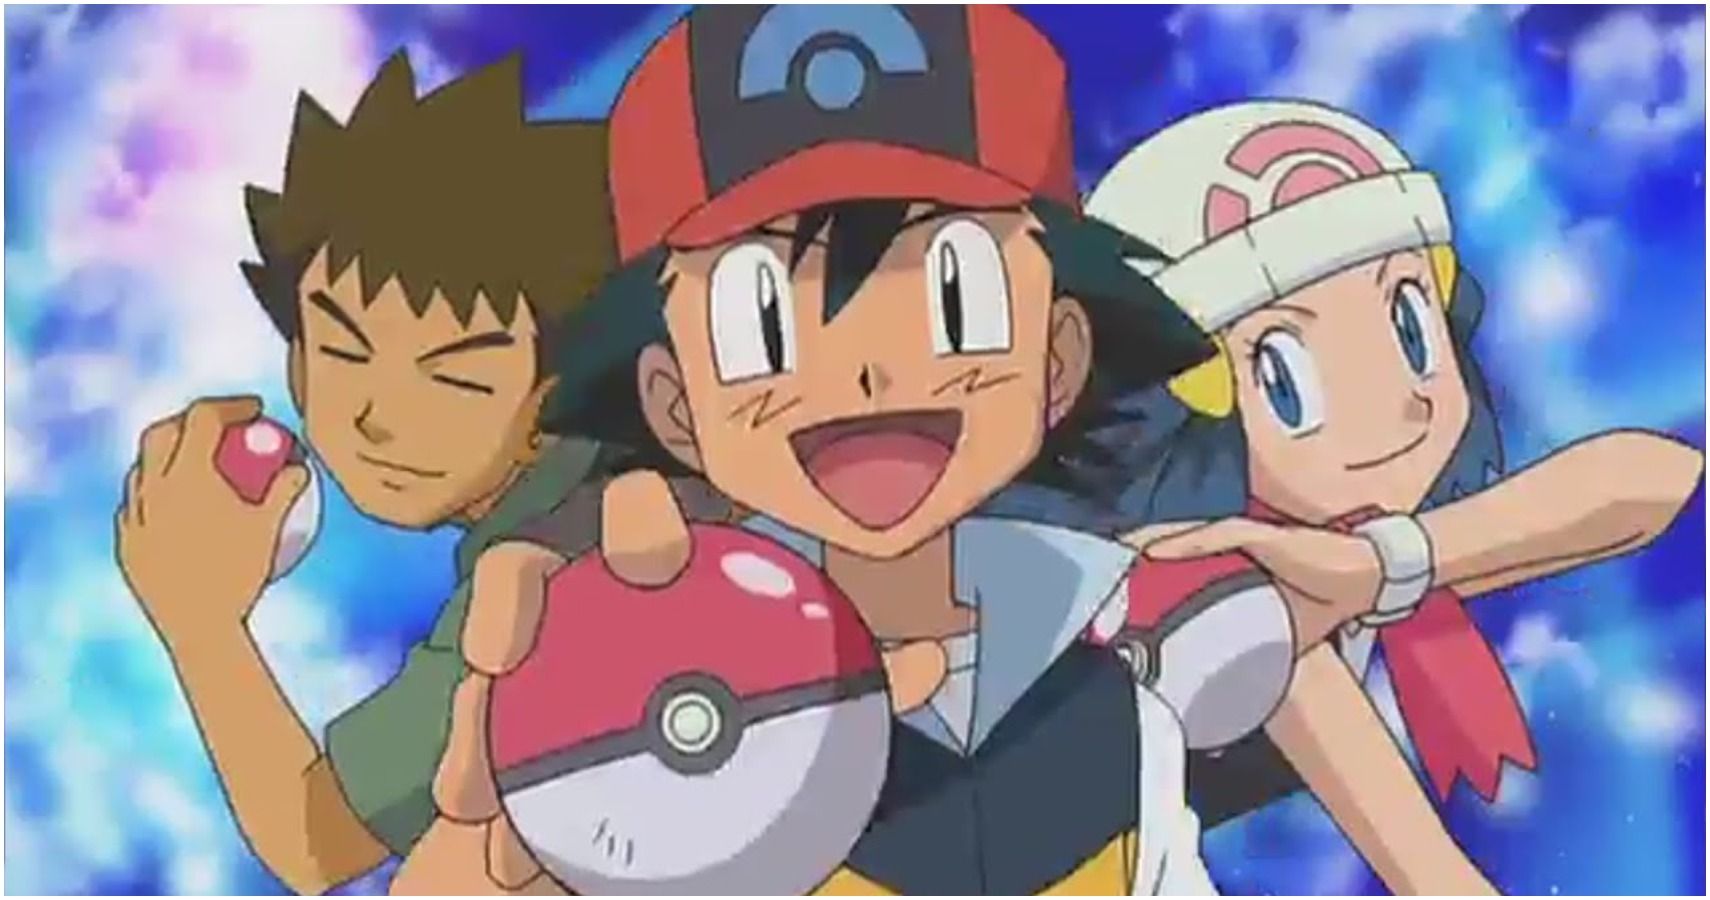 Brock, Ash, and Dawn from Pokemon holding Pokeballs